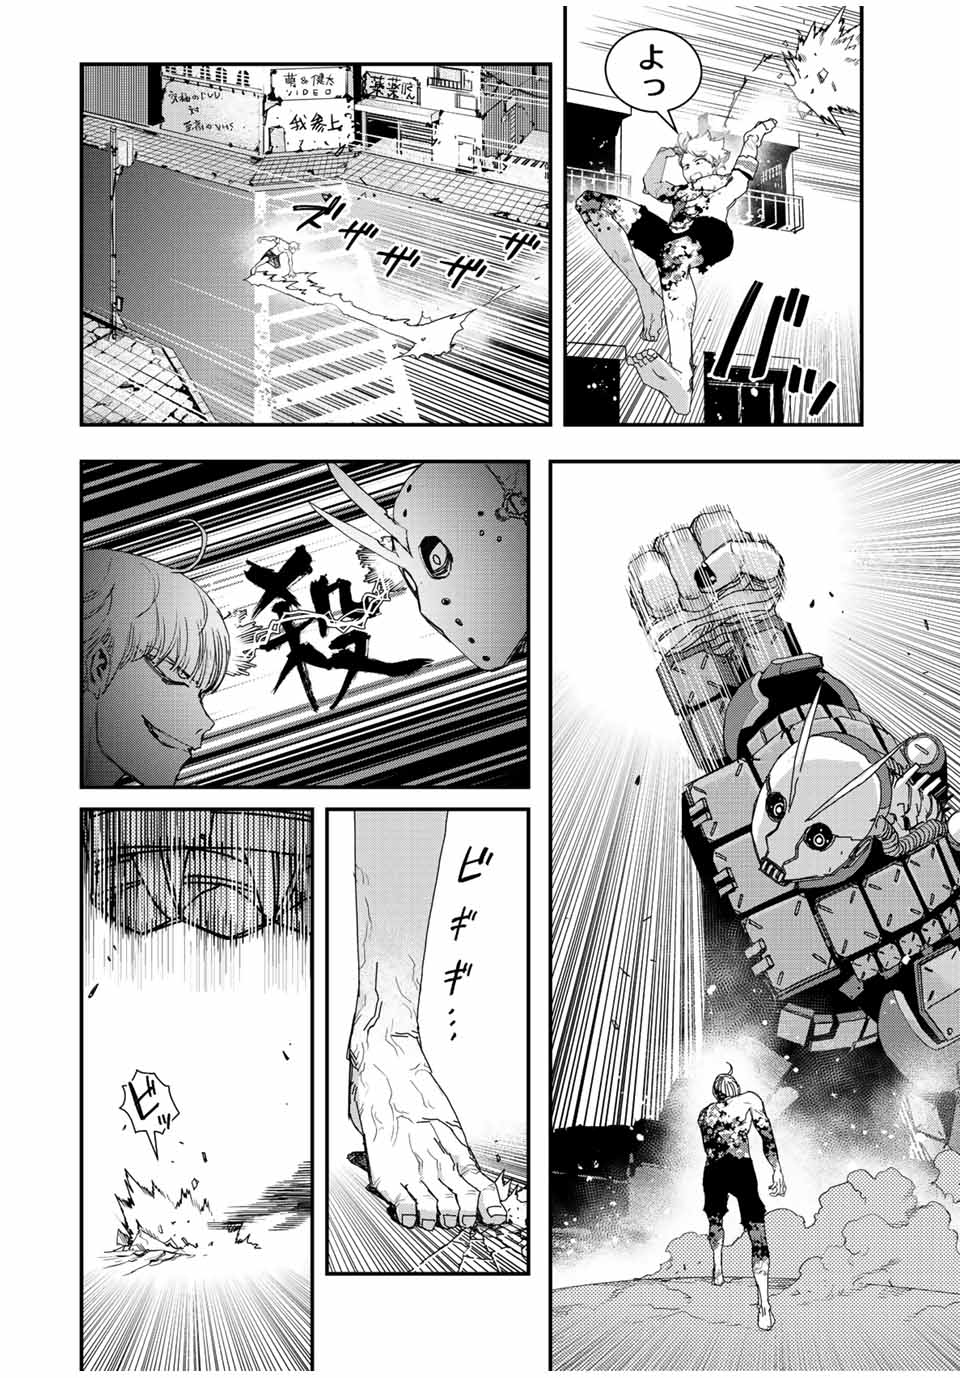 戦車椅子-TANK CHAIR- 第17話 - Page 14